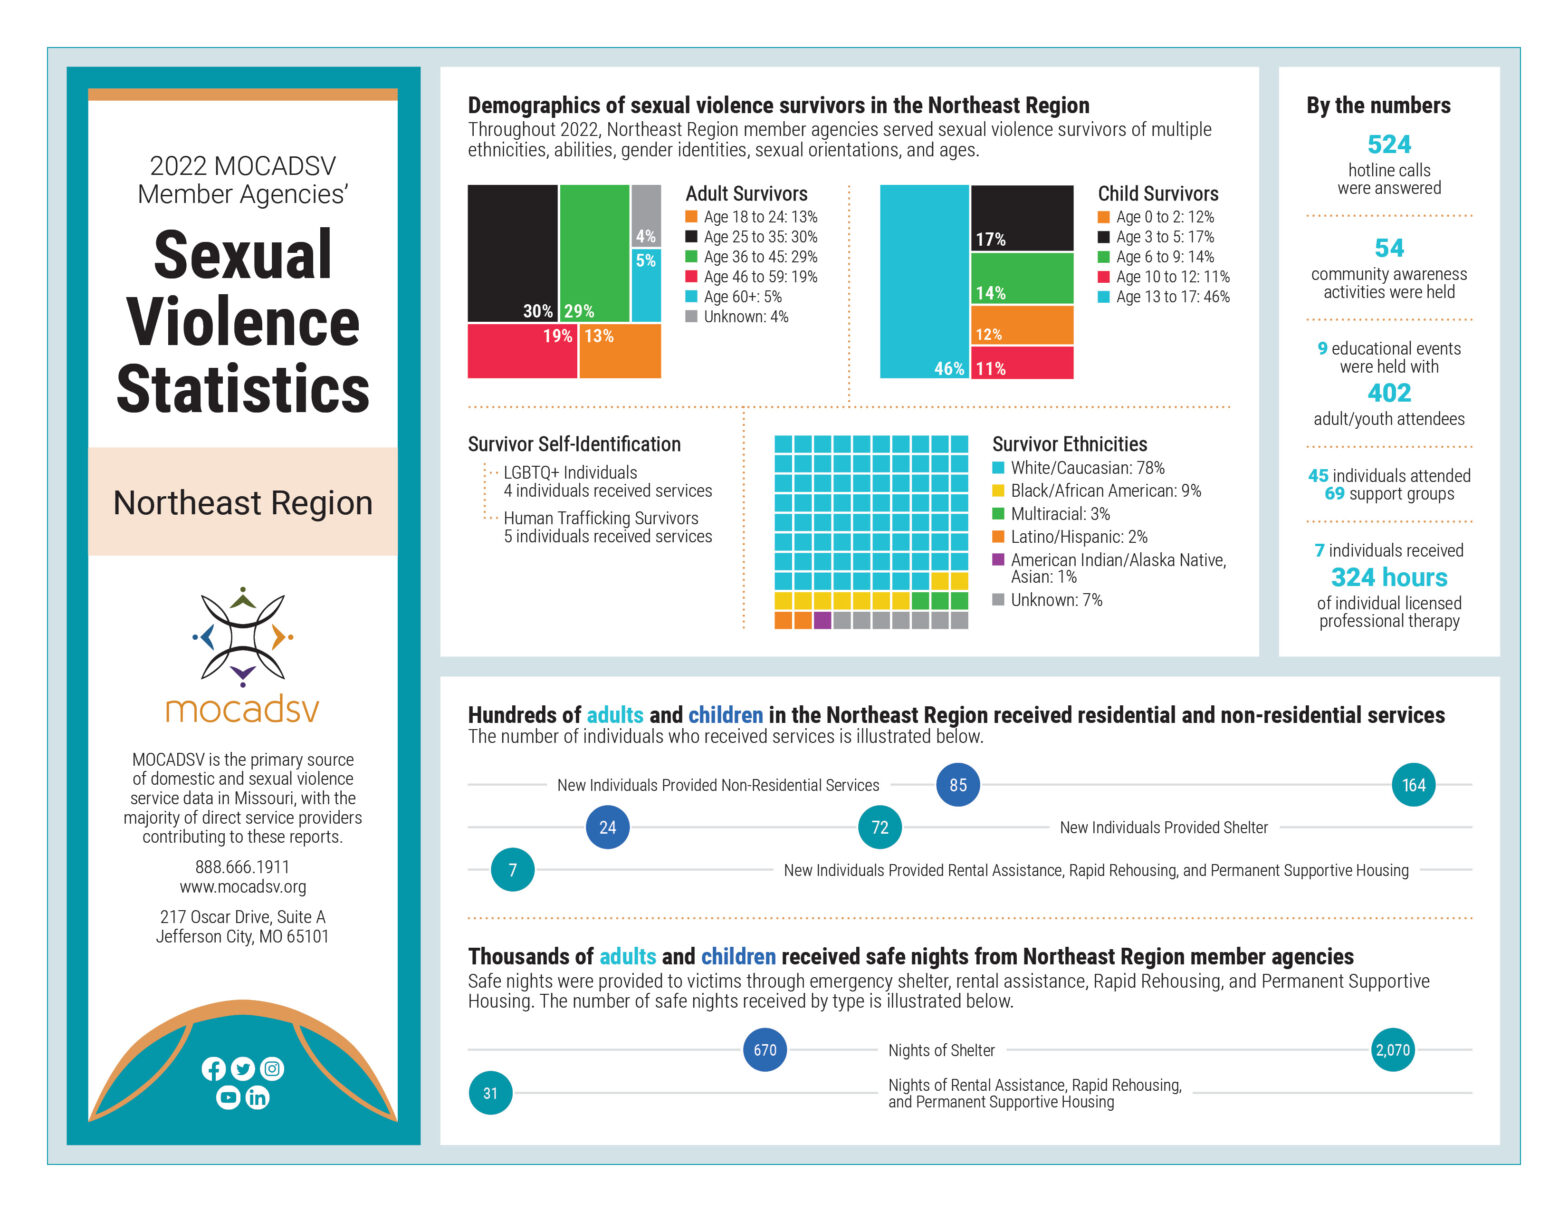 NE Region Sexual Violence Statistics